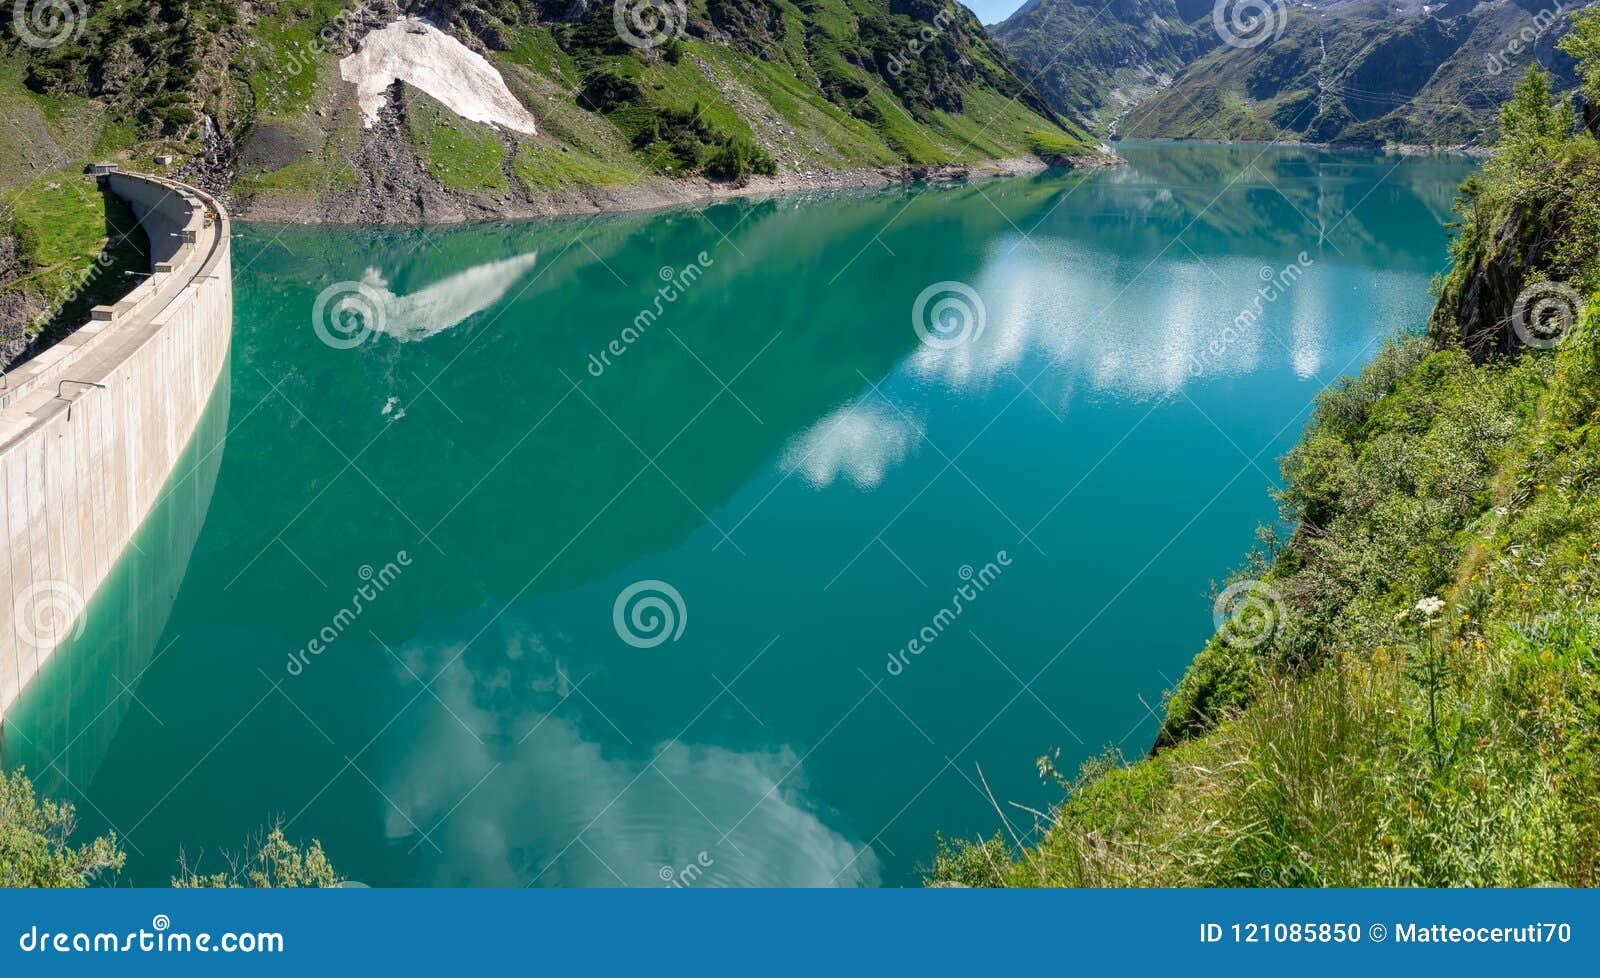 landscape of the dam of the lake barbellino, an alpine artificial lake. italian alps. italy